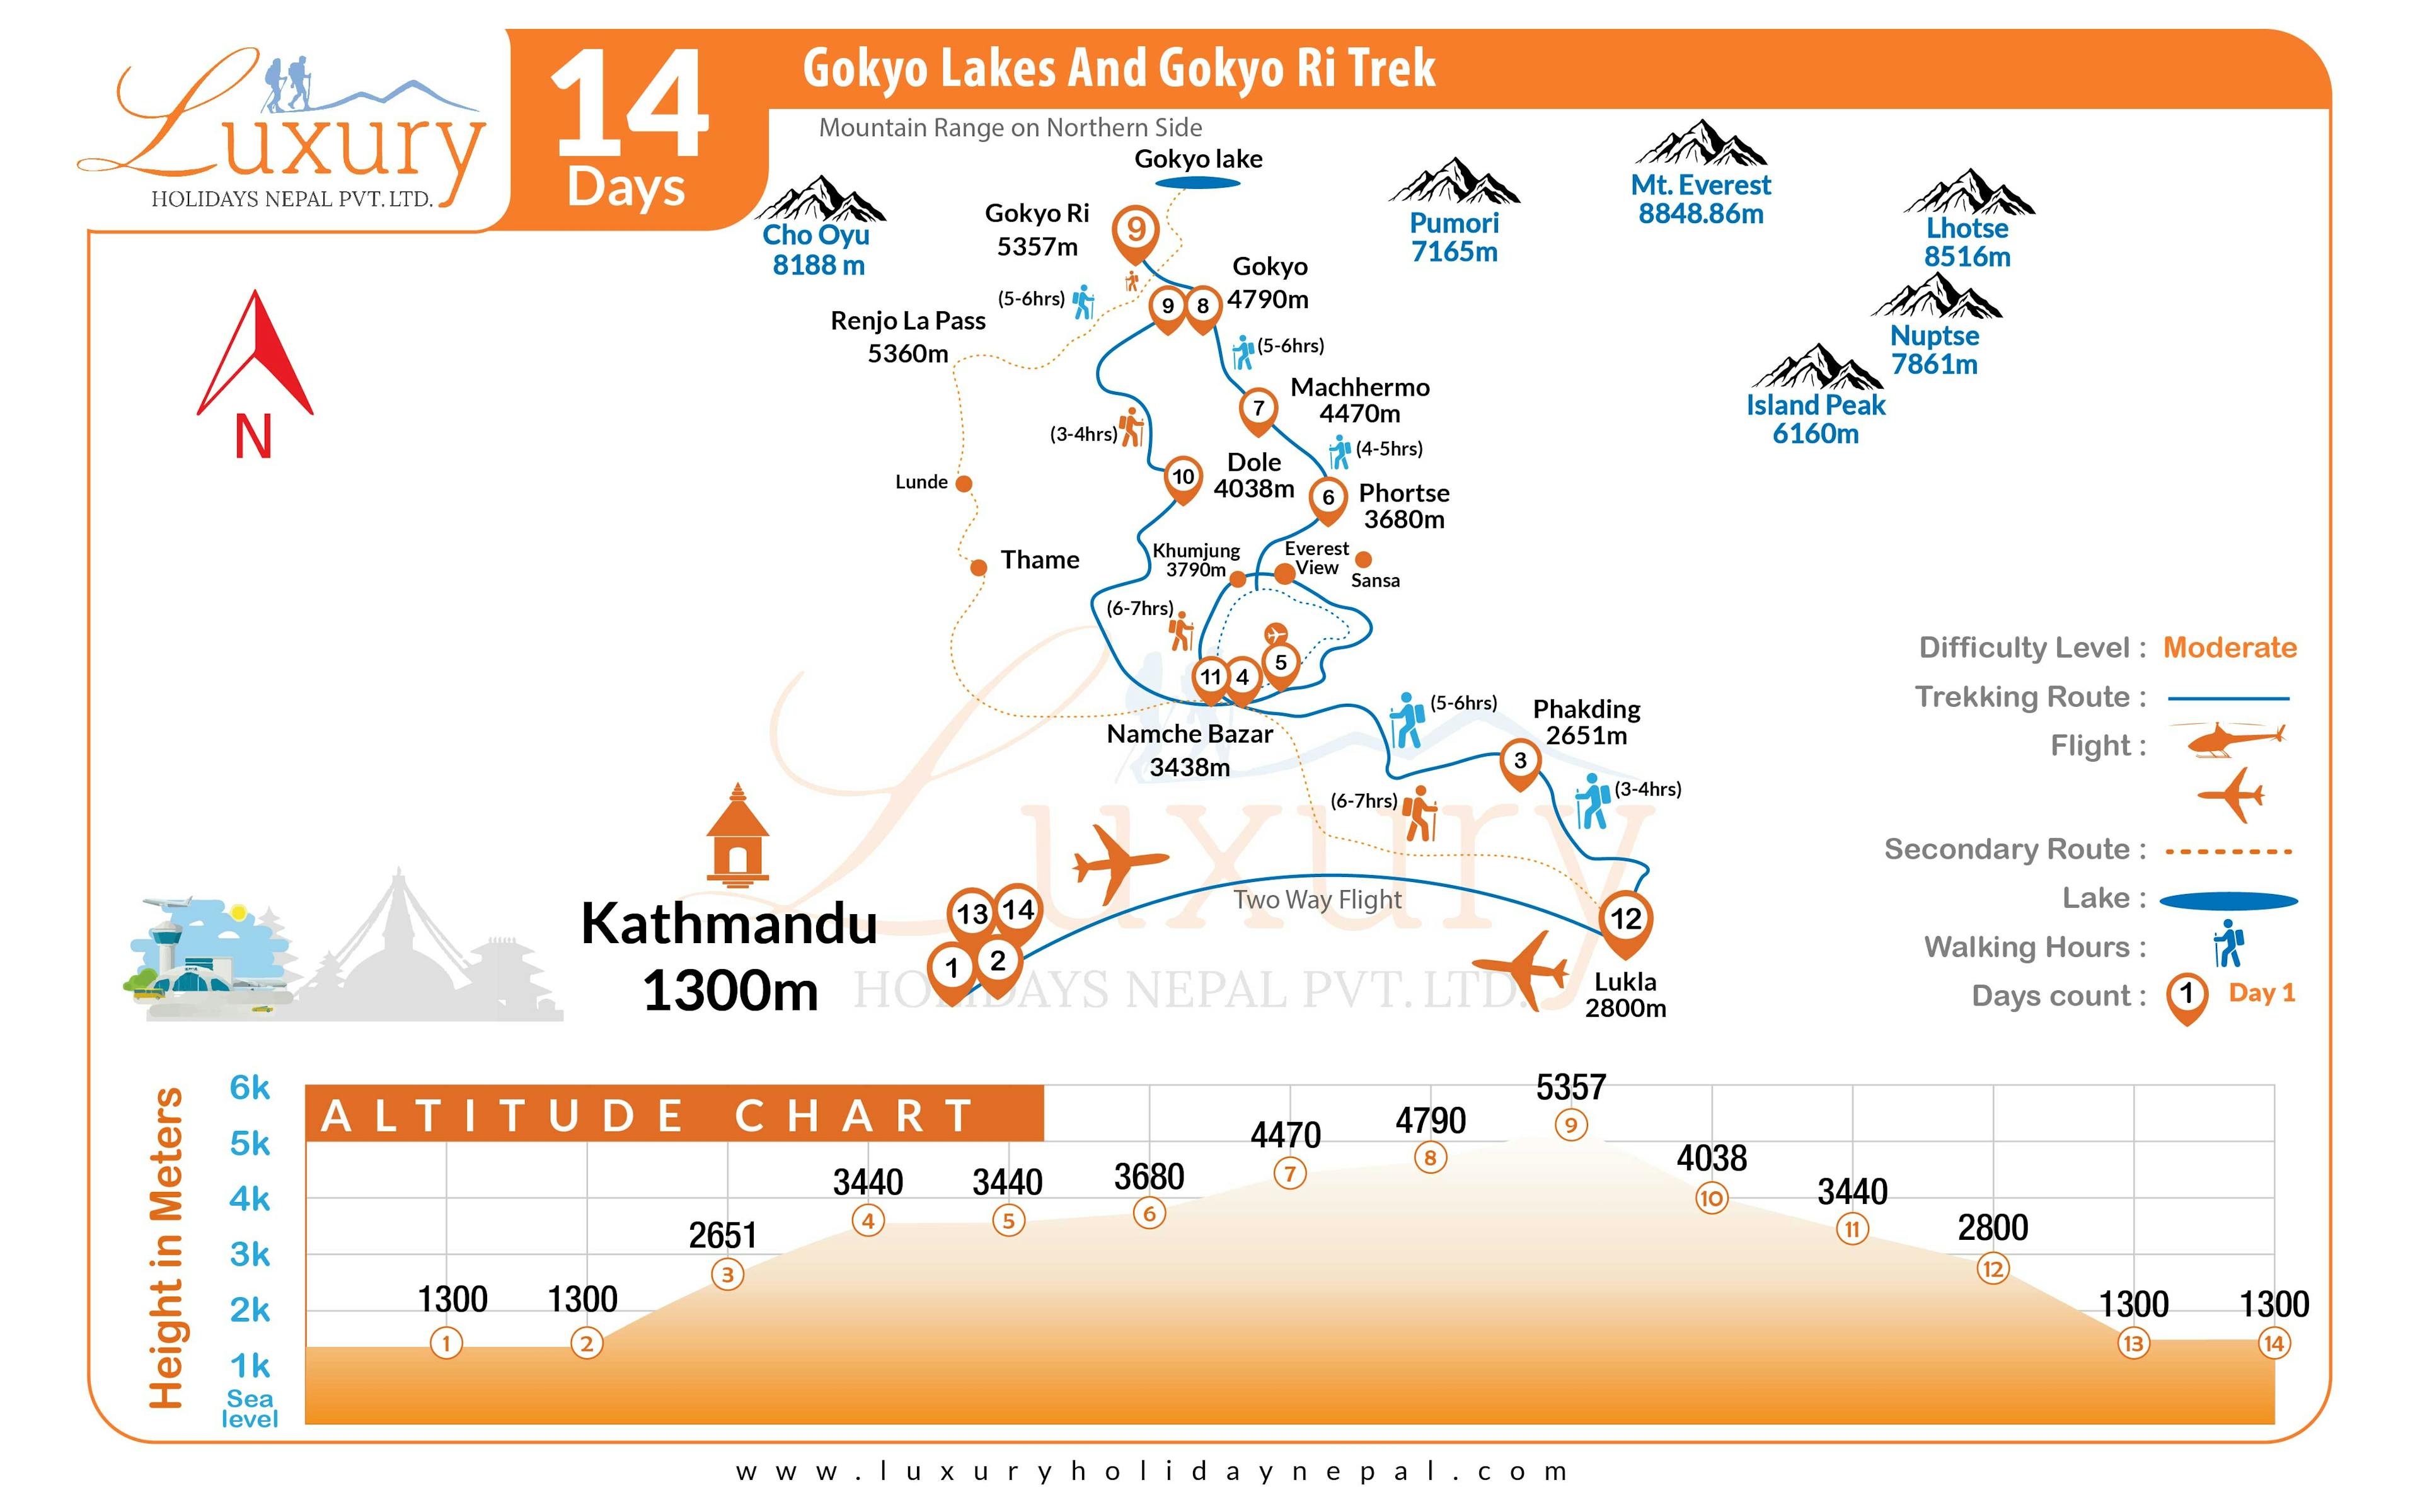 Gokyo Lakes and Gokyo Ri TrekMap